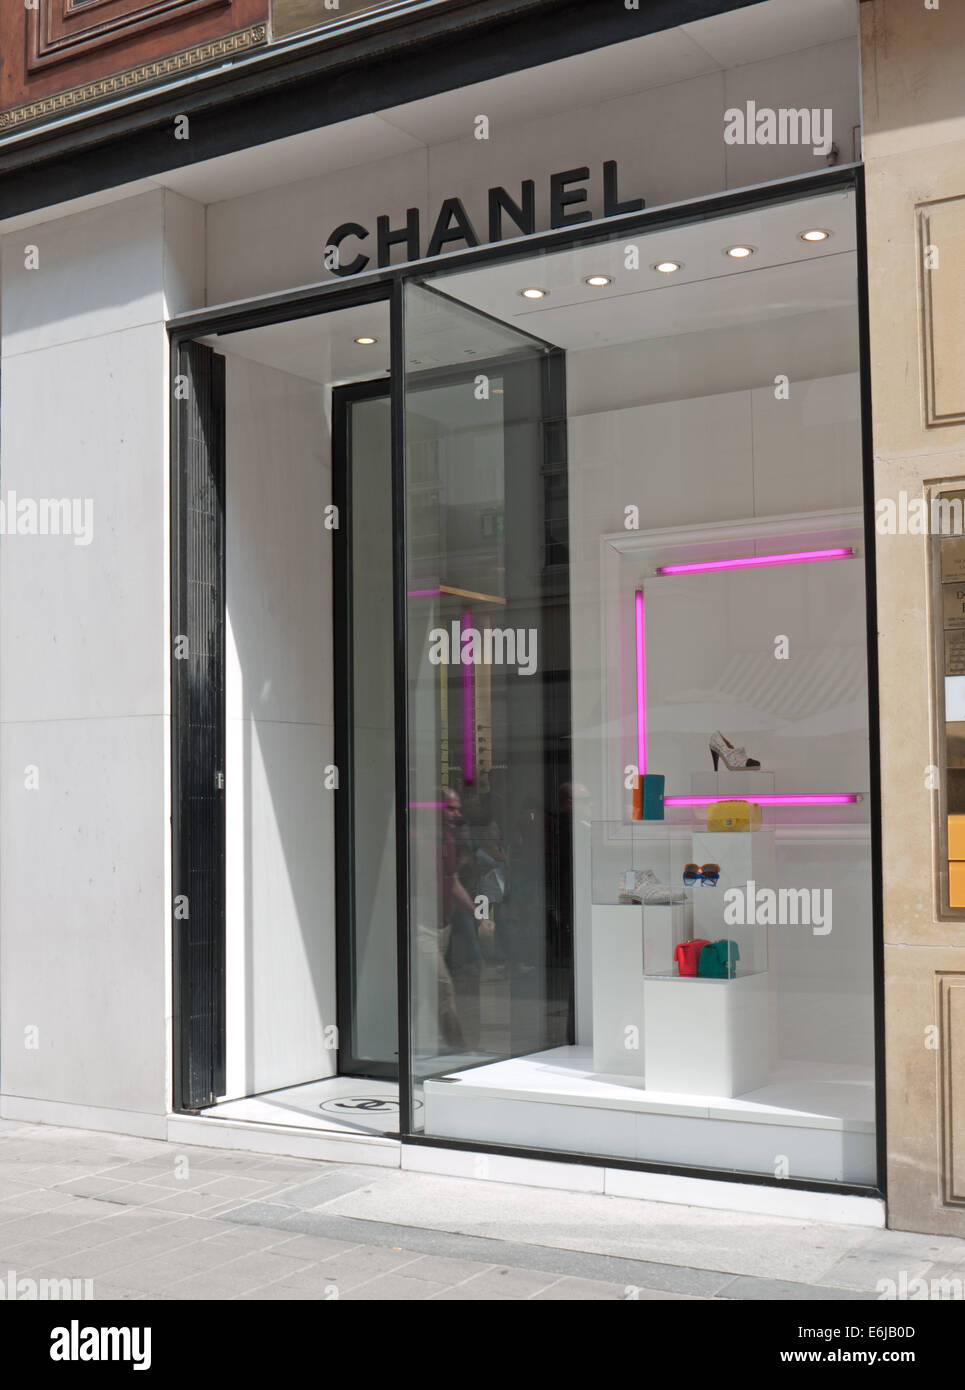 Chanel store window and entrance, Vienna, Austria Stock Photo - Alamy